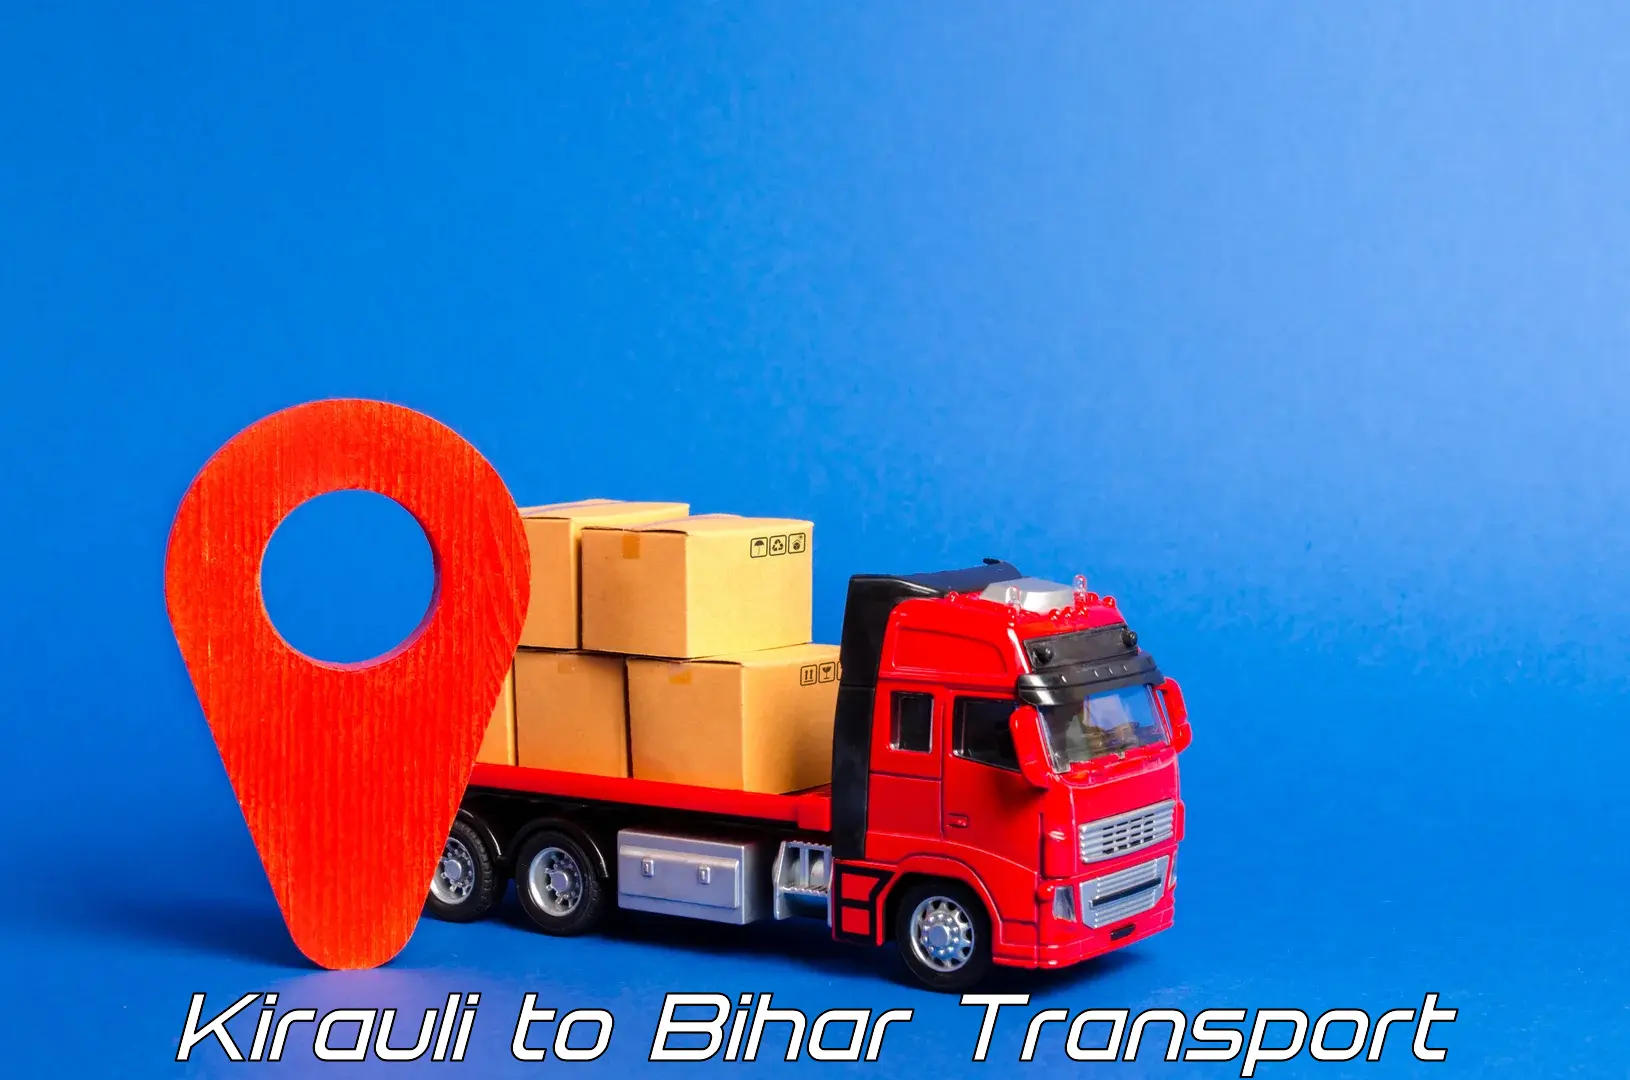 Pick up transport service in Kirauli to Biraul